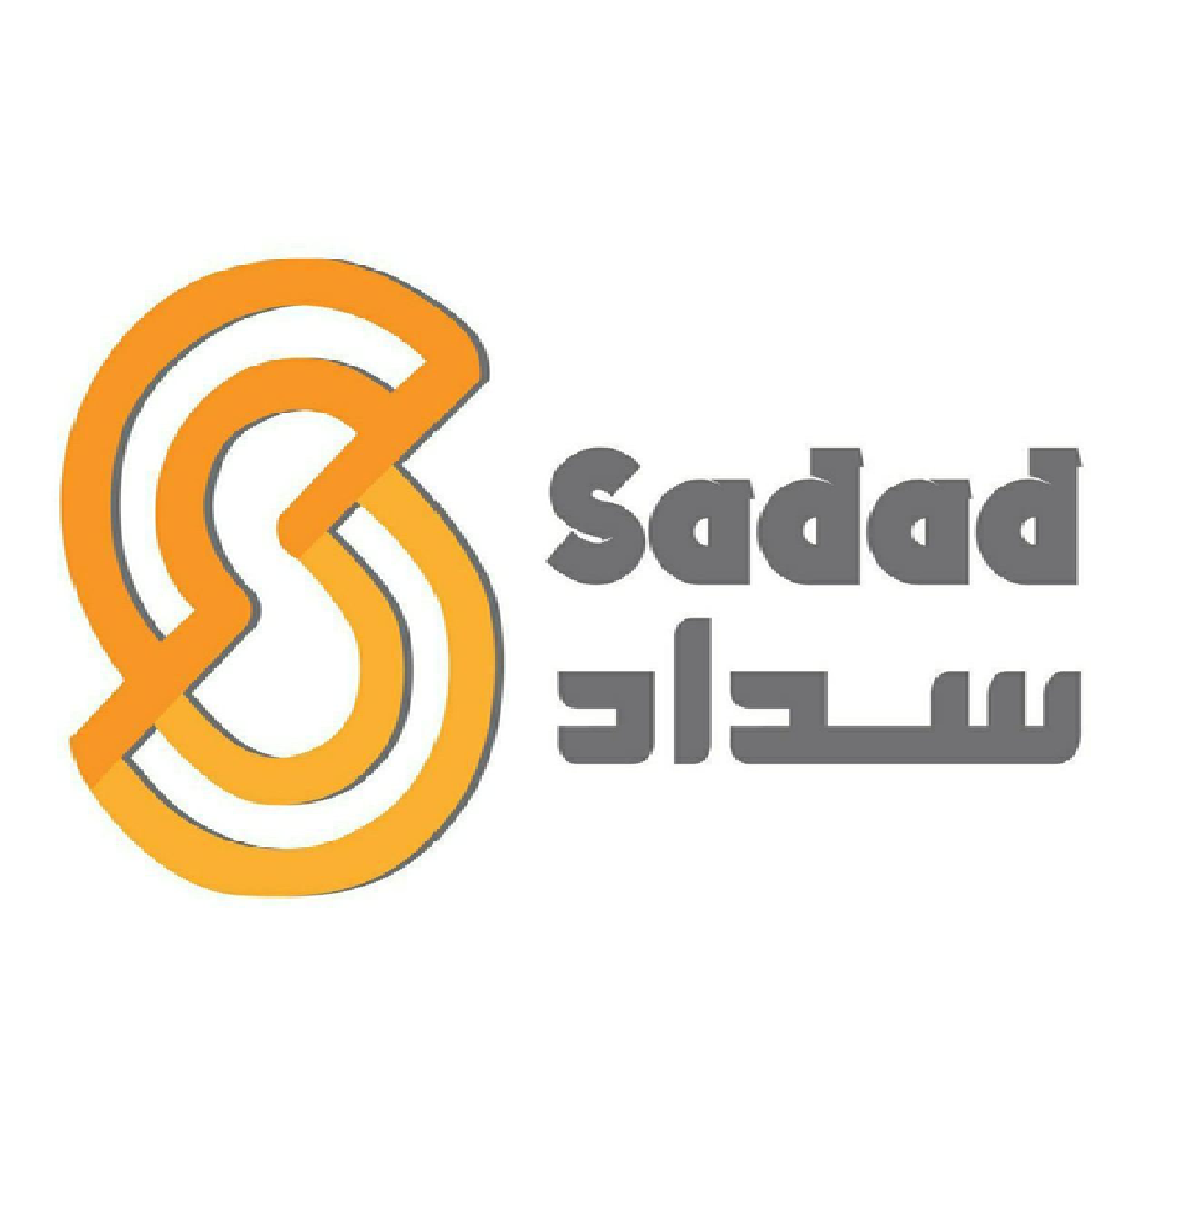 Sadad Egypt